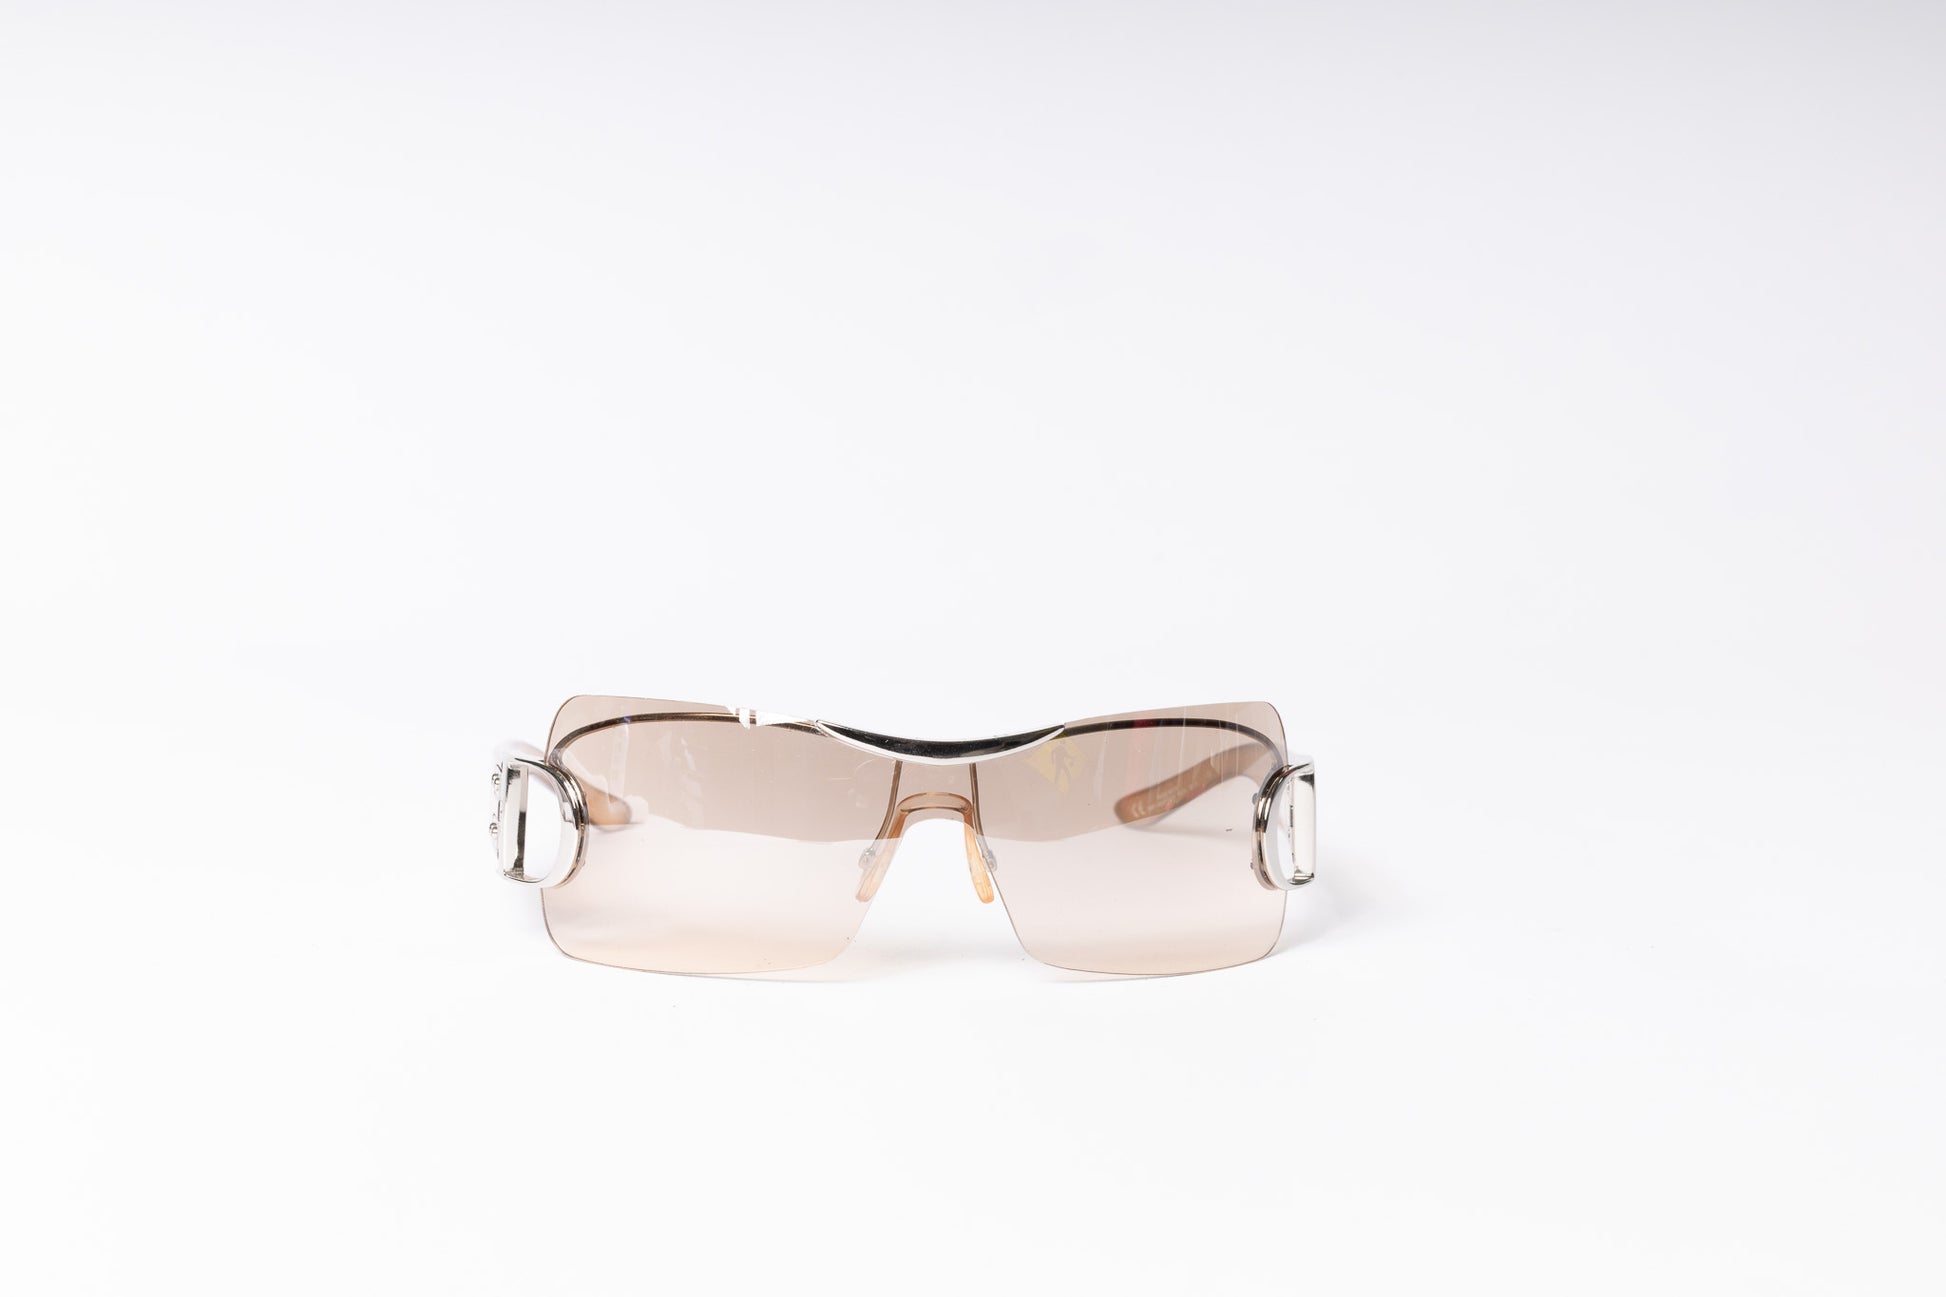 Dior Air Speed Sunglasses